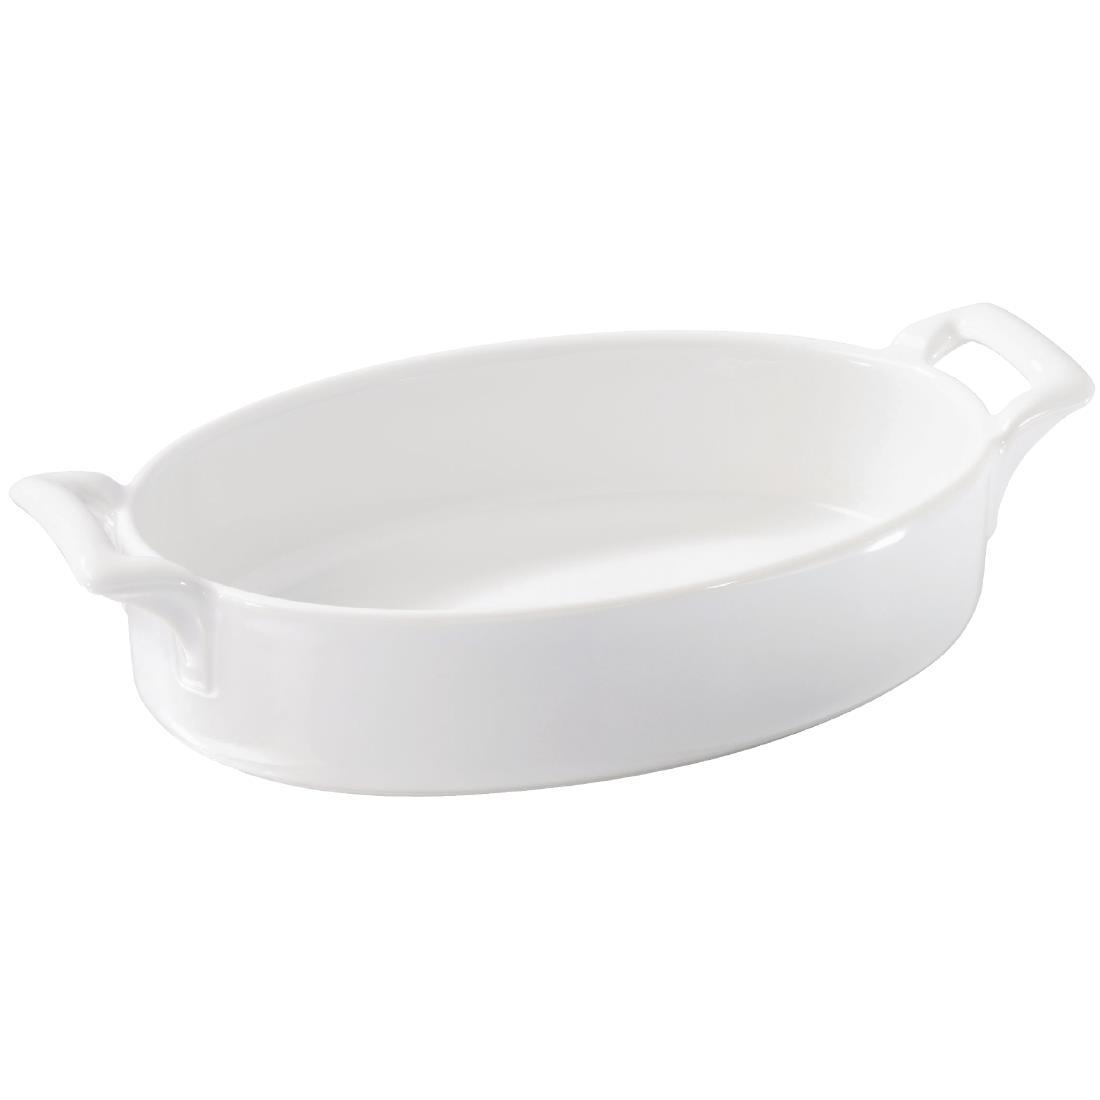 Revol Belle Cuisine Deep Oval Baking Dishes White 180x 120mm (Pack of 4) - DM299  - 1